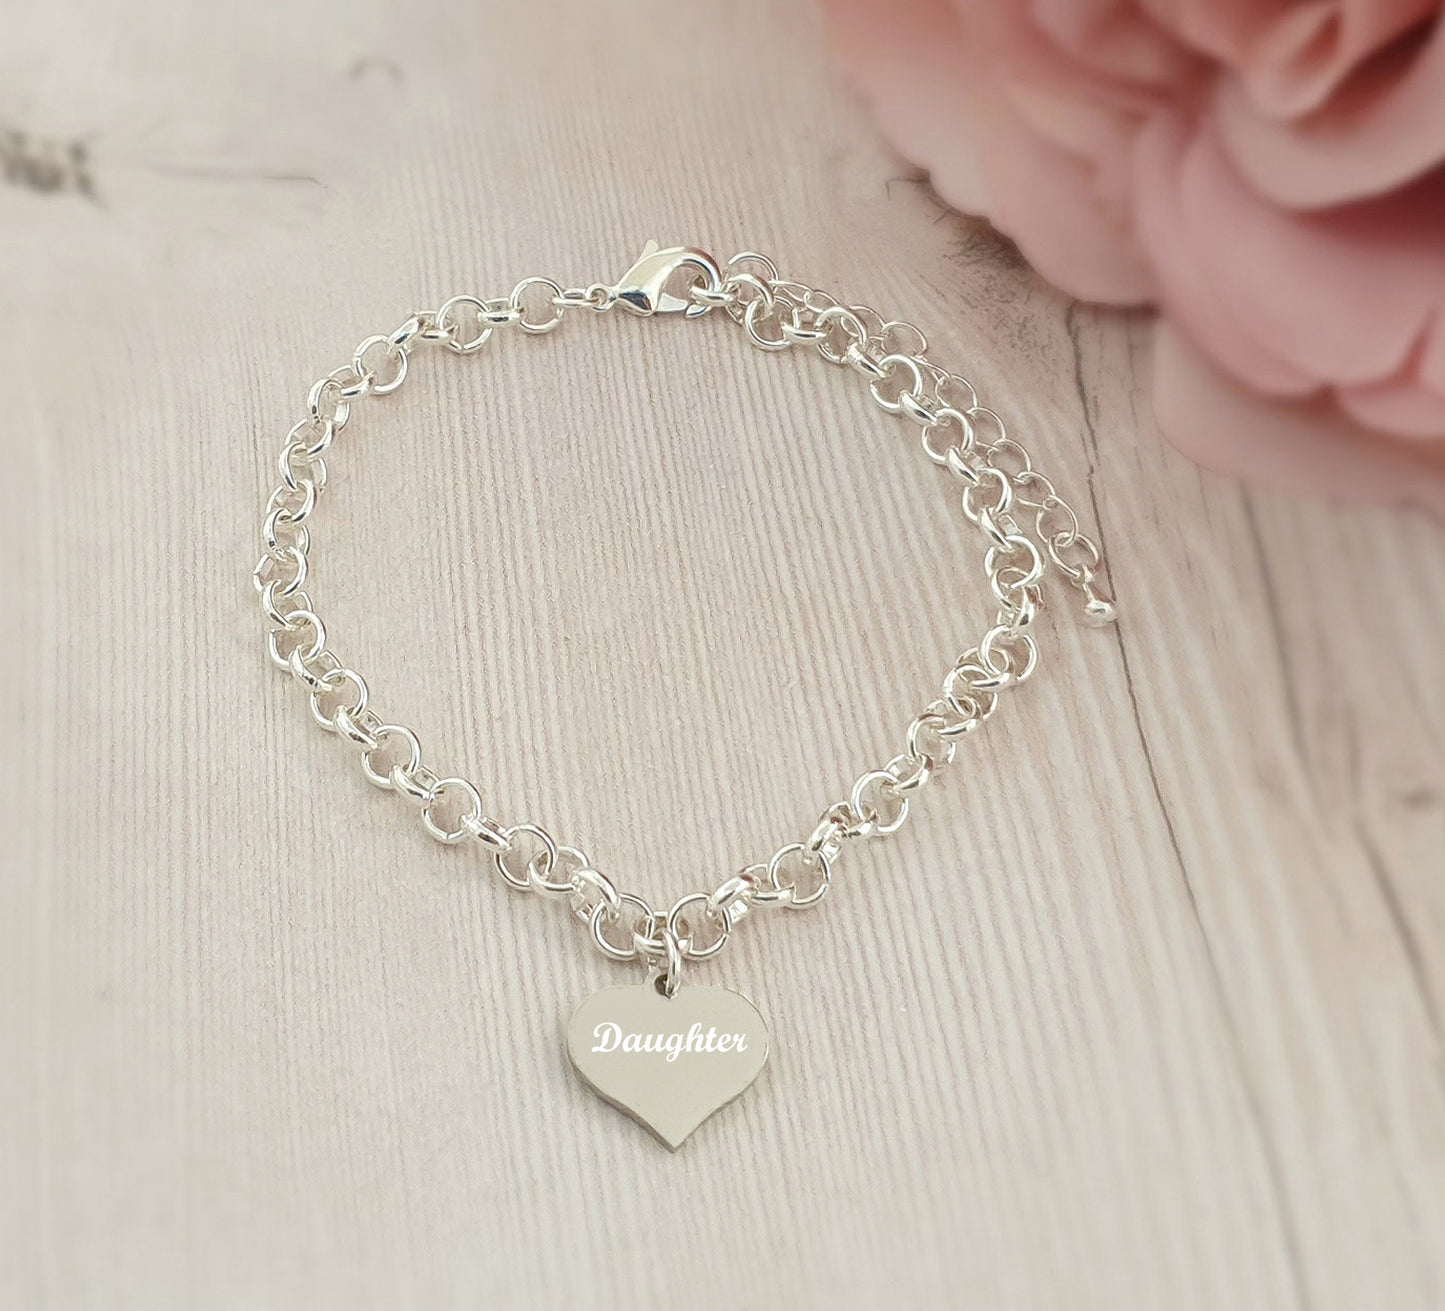 Special Daughter Engraved Heart Charm Link Bracelet, Personalised bracelet, Message Jewellery